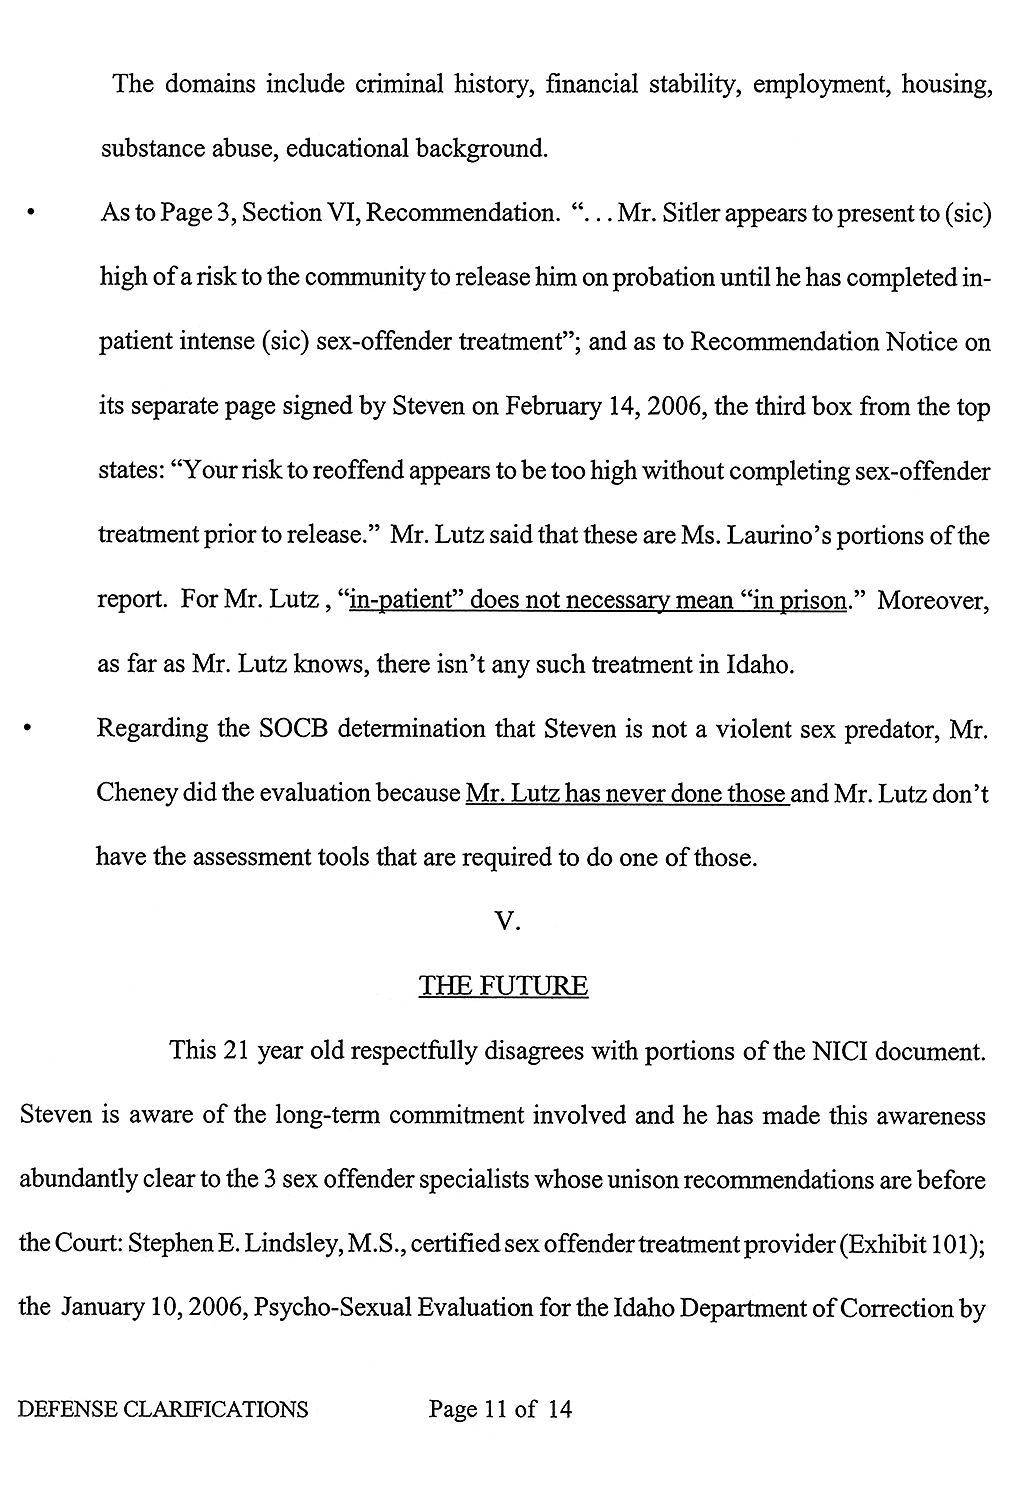 Defense Clarifications page 11